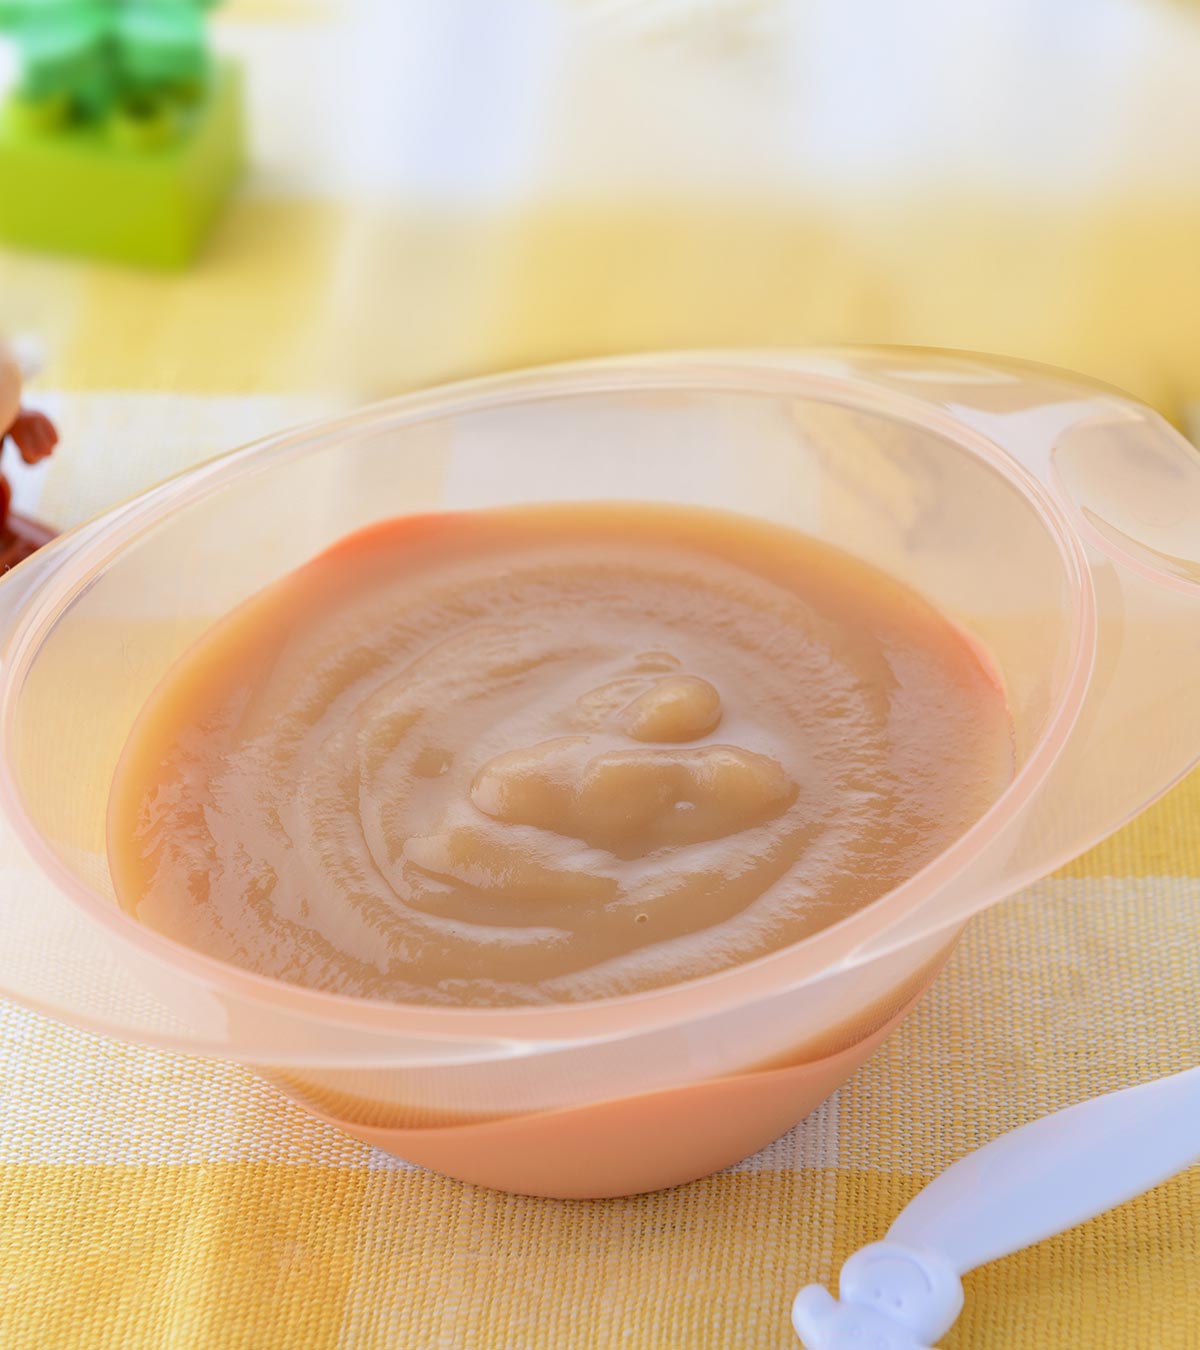 8 Simple Steps To Prepare Ragi Porridge For Your Baby